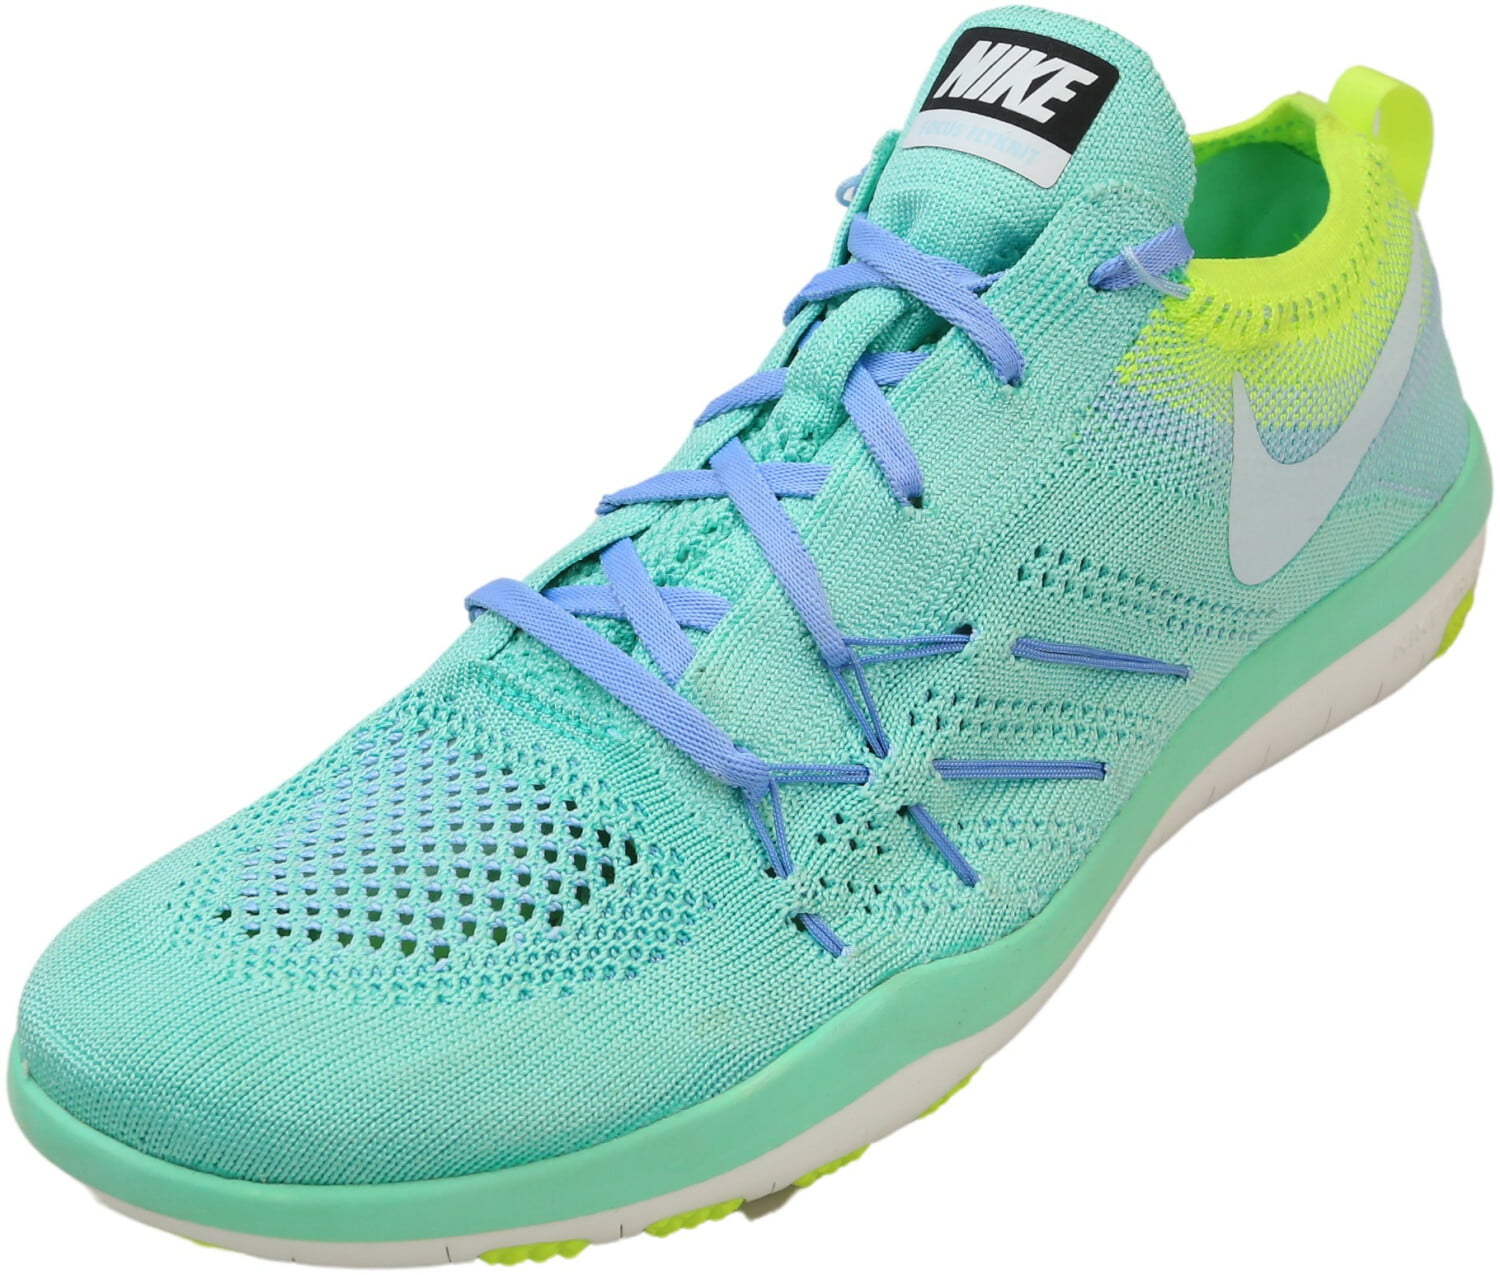 Nike Women's Free Tr Focus Flyknit Green Glow Glacier Blue-Volt Cross Trainers - 8.5M - Walmart.com